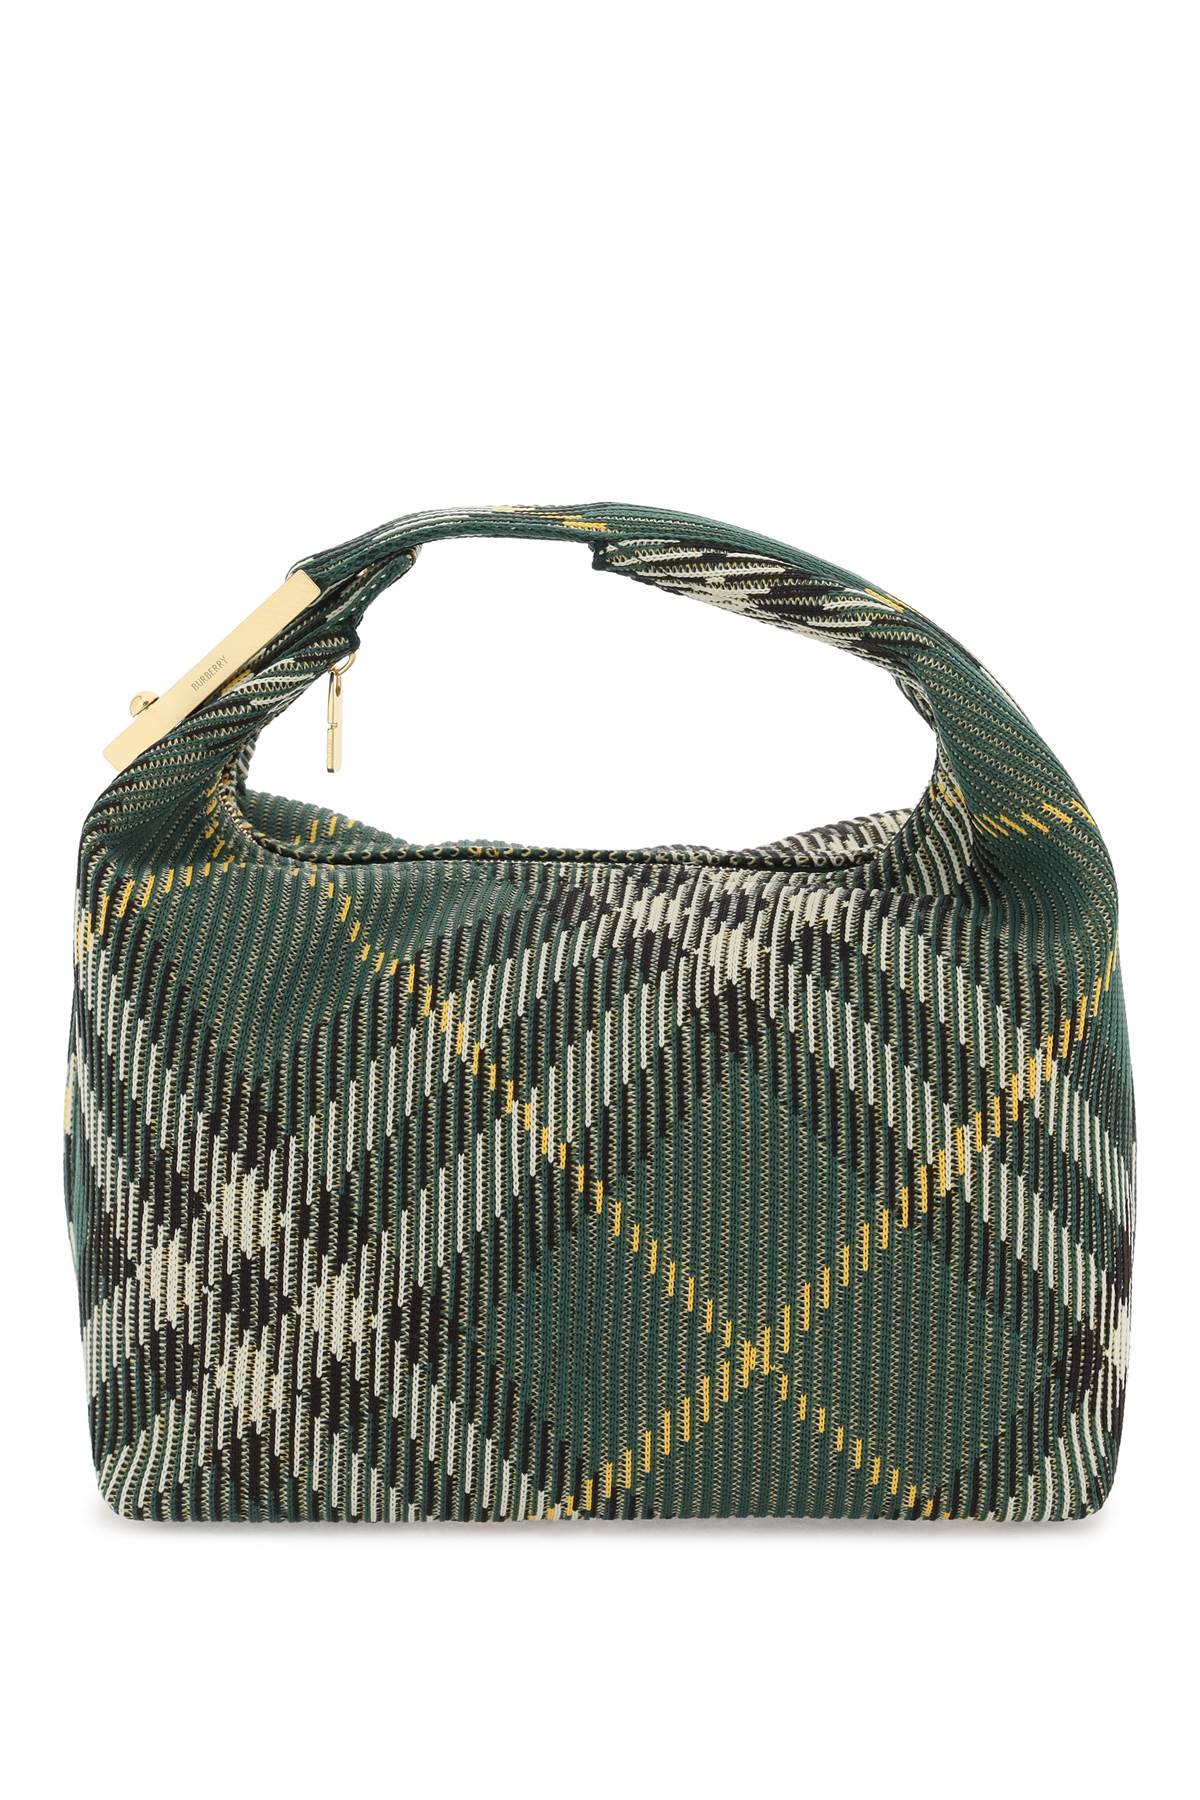 Burberry Medium Peg Bag   Green